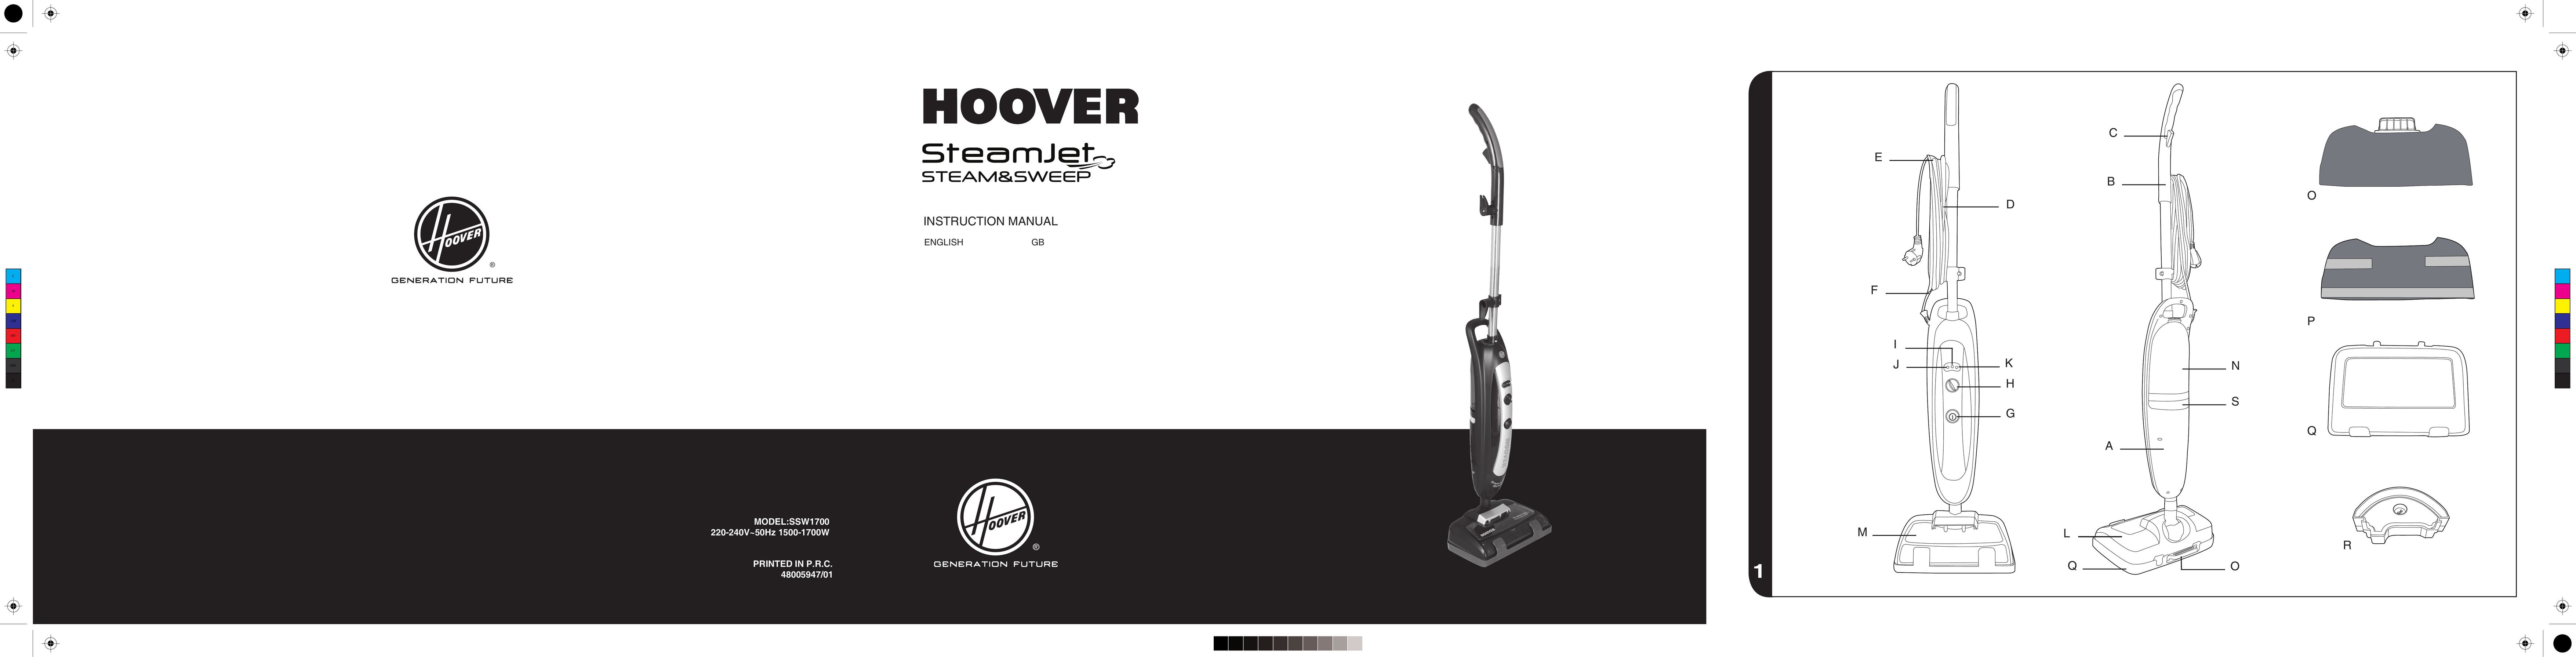 Hoover SSW1700 Carpet Cleaner User Manual